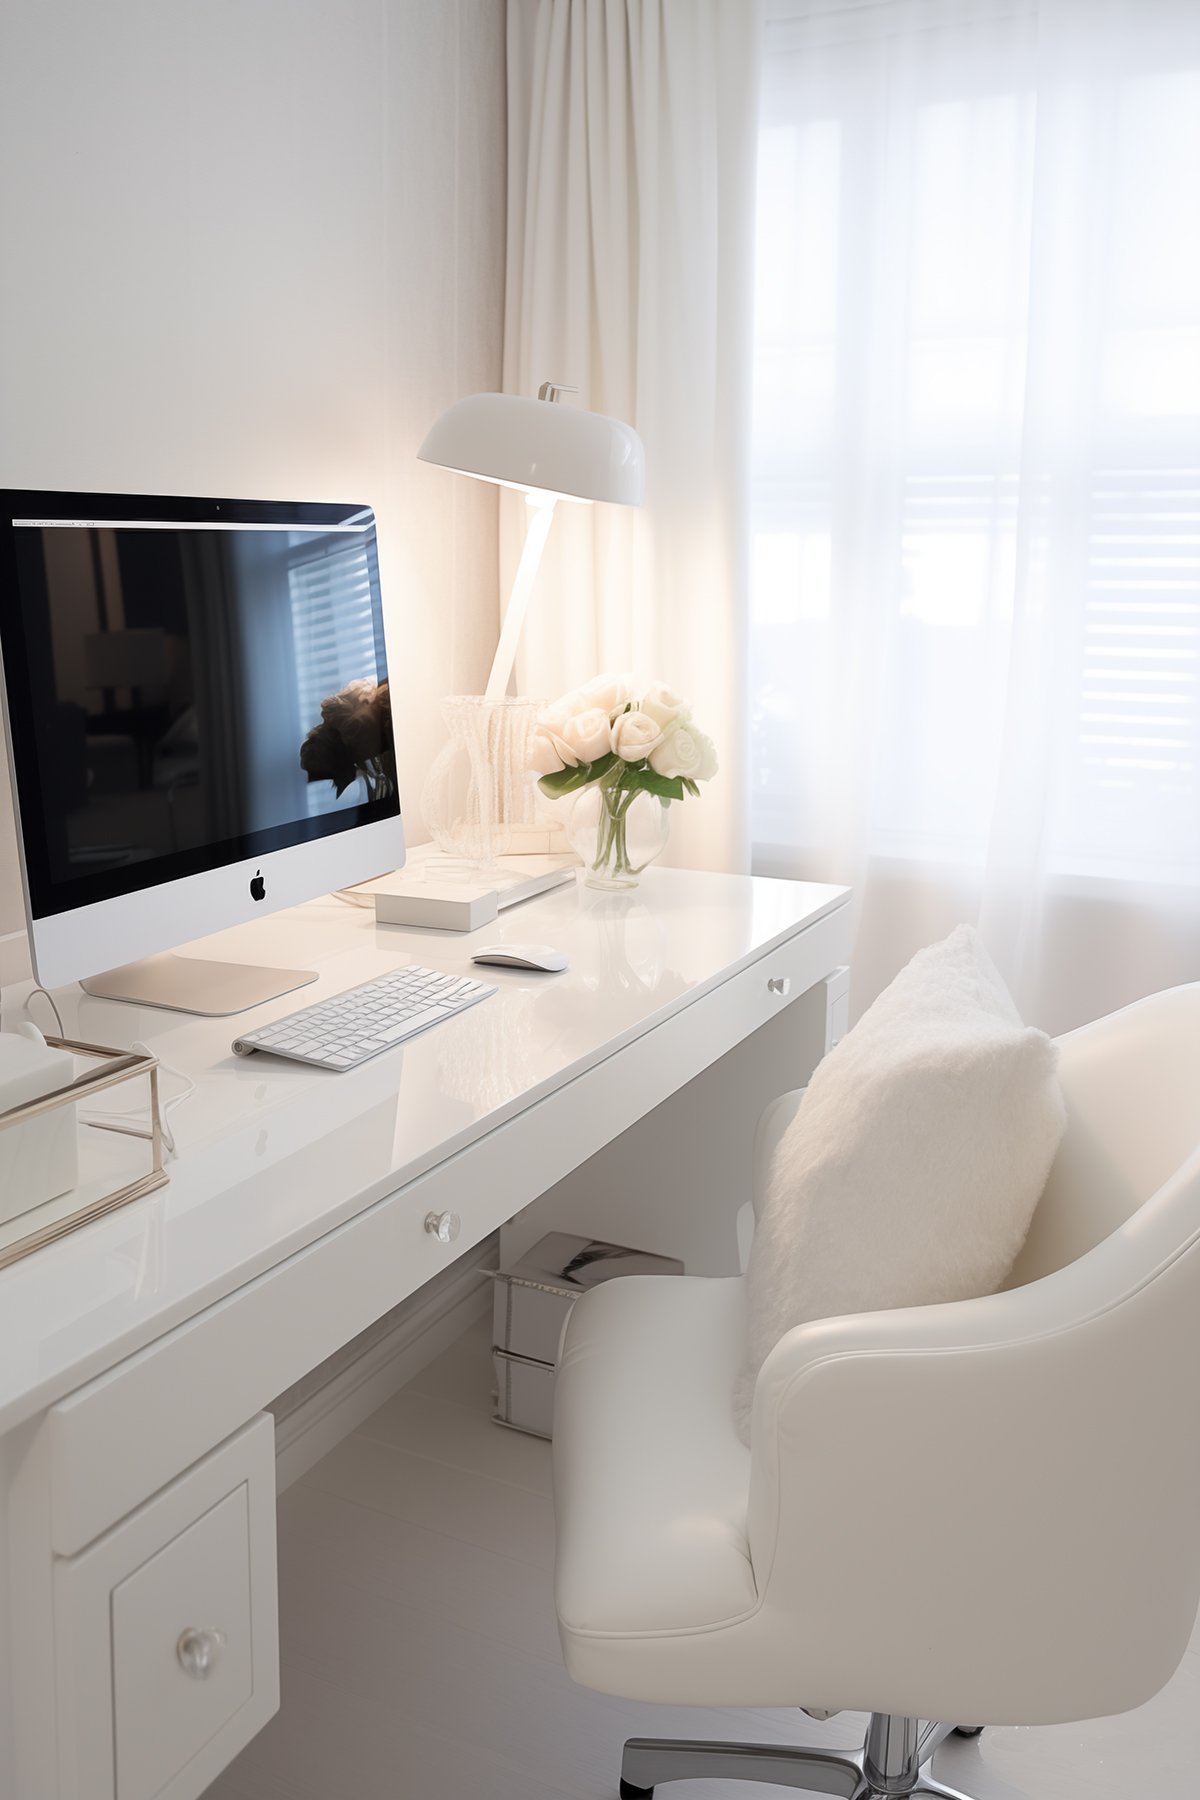 Modern minimalist home office with white desk, designer chair, and elegant desk lamp.